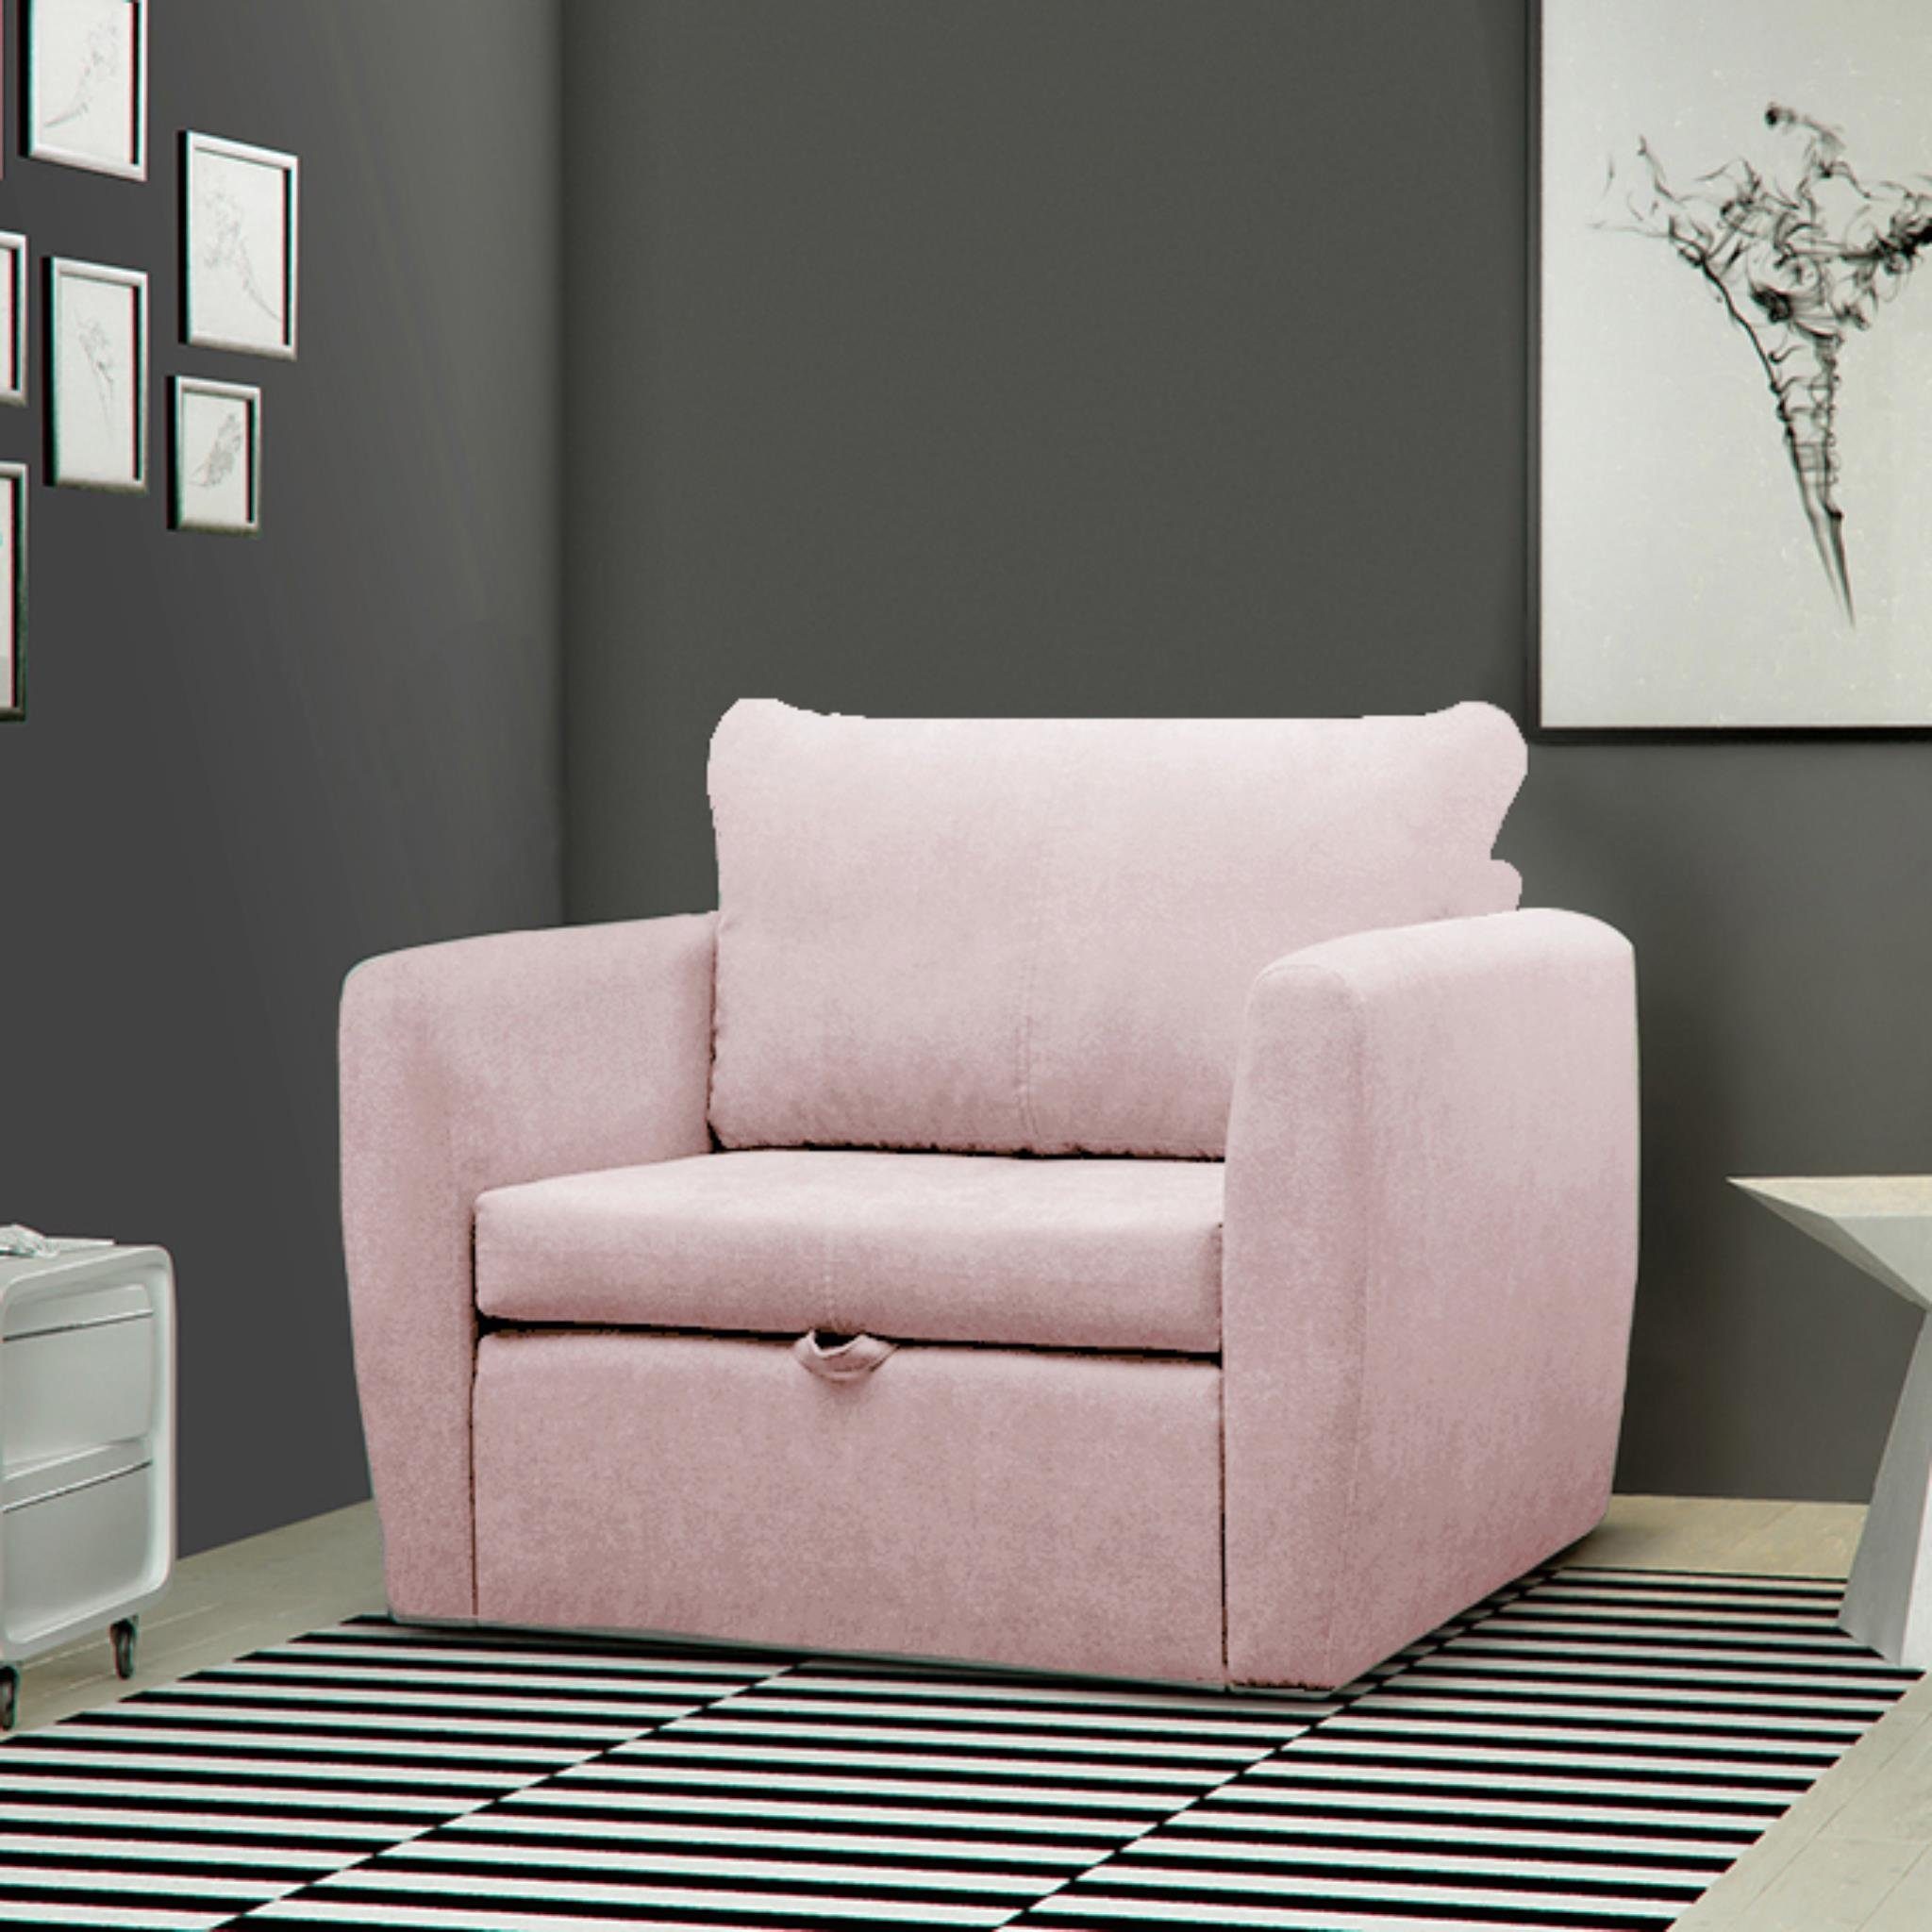 Beautysofa Relaxsessel Kamel (Modern 1-Sitzer Sofa, Wohnzimmersessel), mit Schlaffunktion, Bettkasten, Polstersessel Rosa (alfa 02)